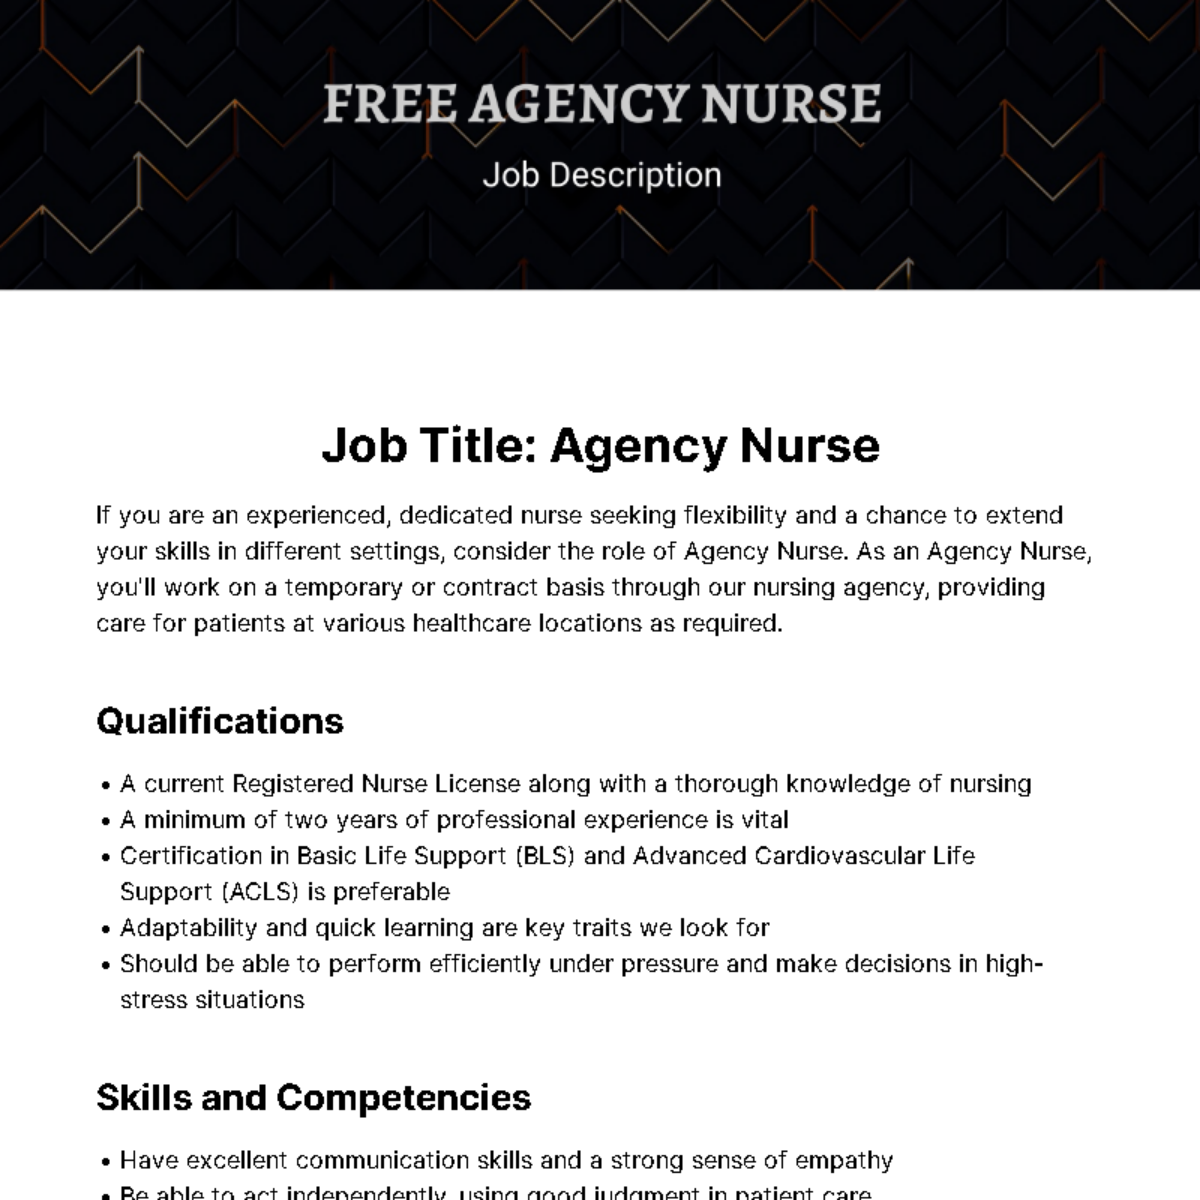 Free Agency Nurse Job Description Template